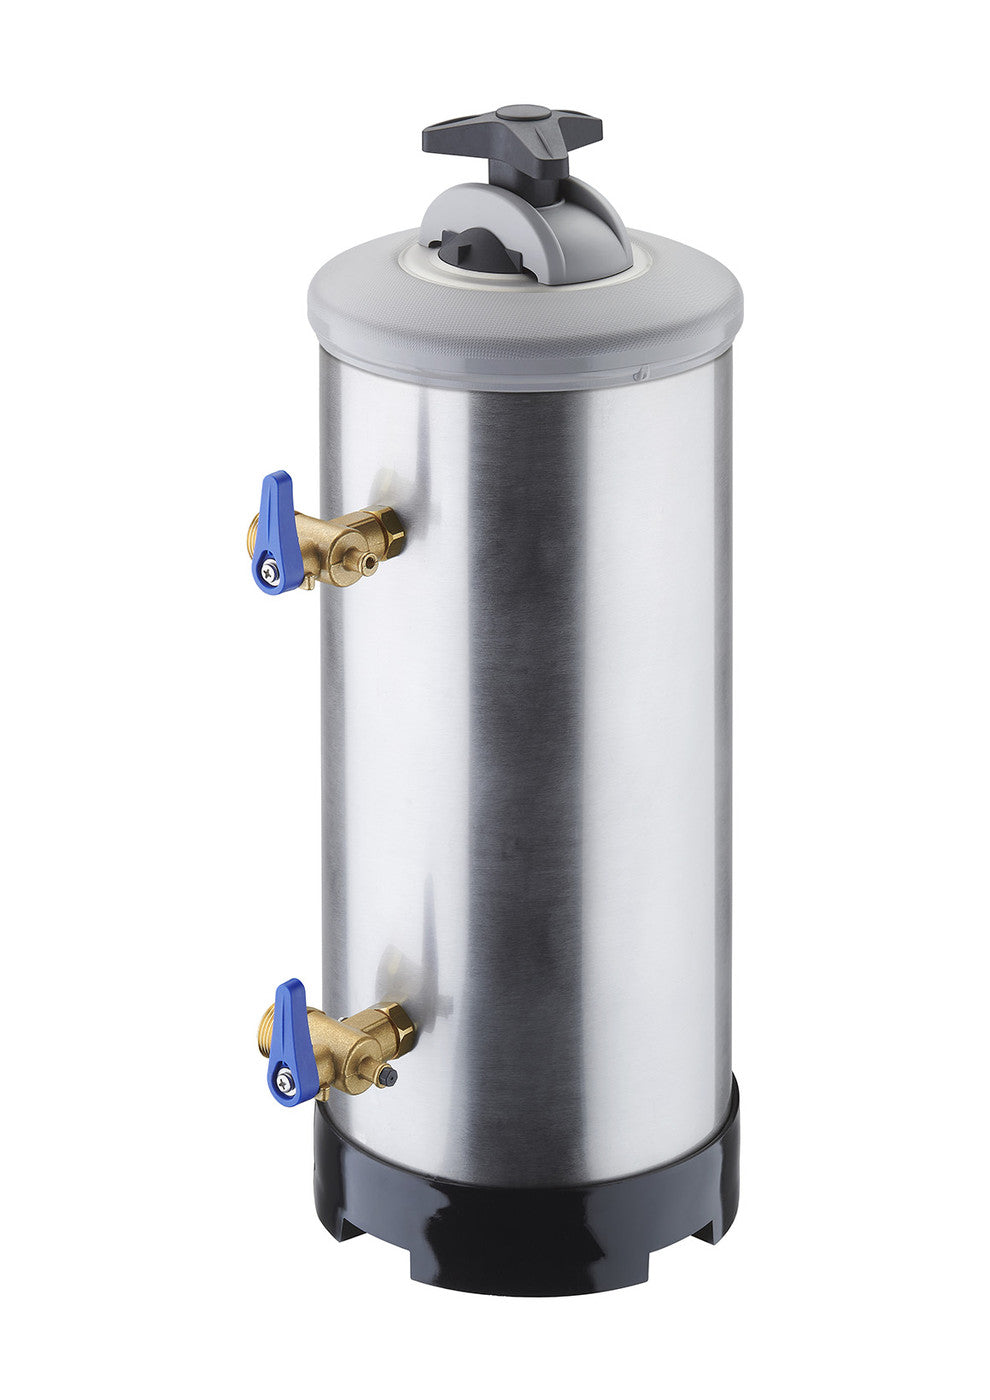 12 Litre Manual Water Softener Q900012 JD Catering Equipment Solutions Ltd